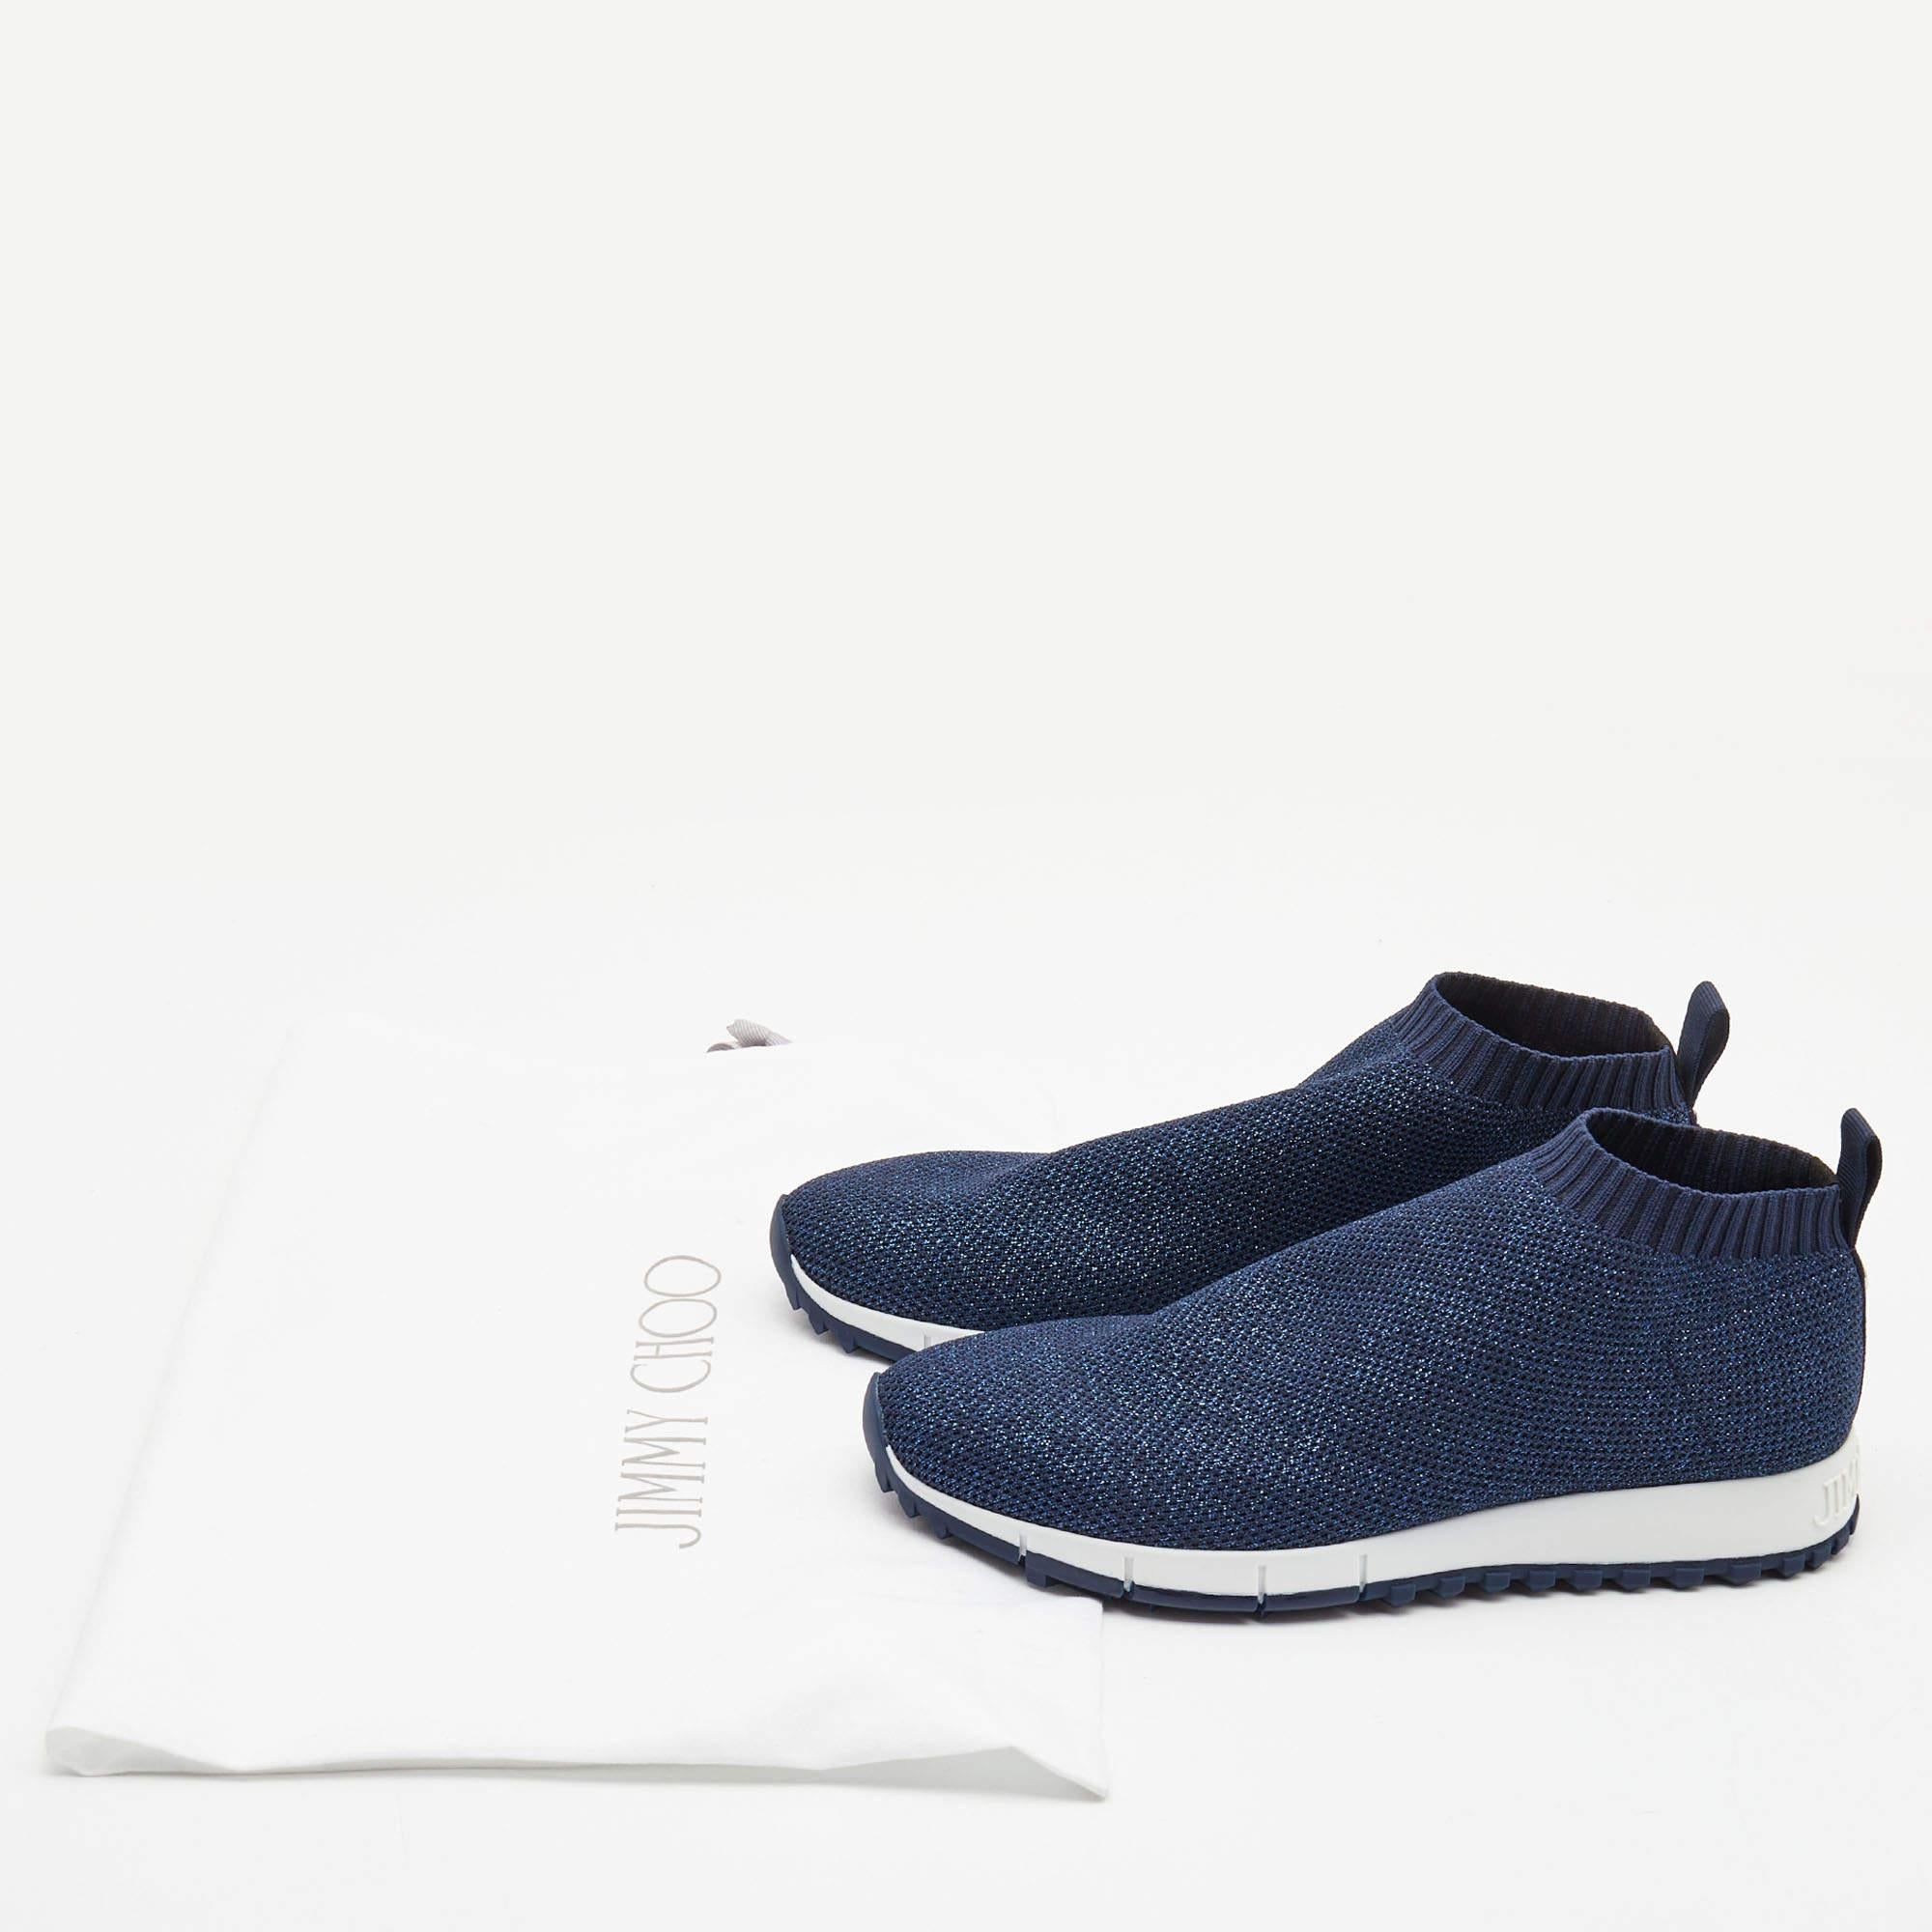 Jimmy Choo Navy Blue Glitter Fabric Low Top Sneakers Size 36.5 2